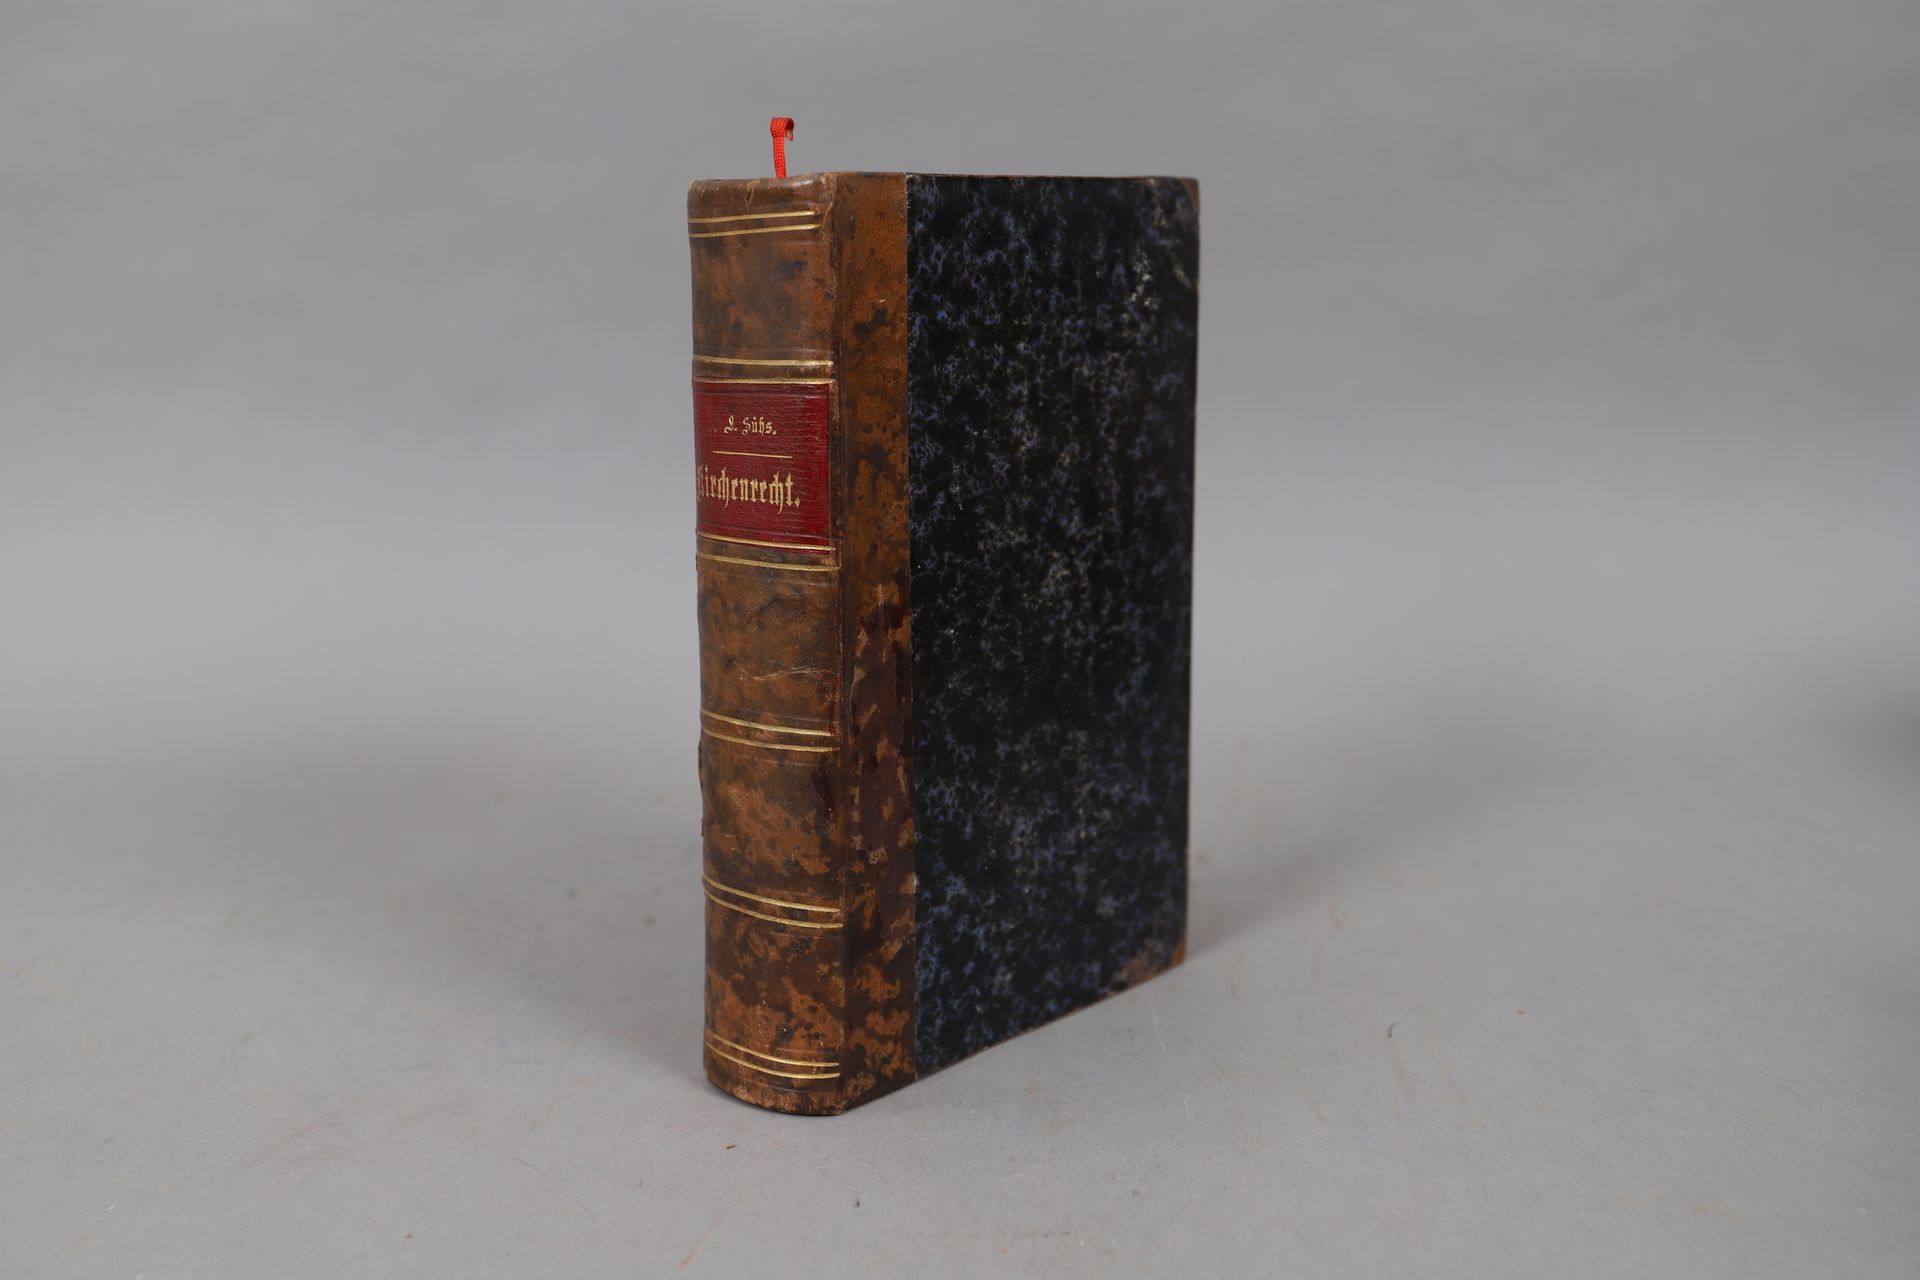 Null lehrbuch kirchenrechts.

卢森堡 1874年。

装订成册。